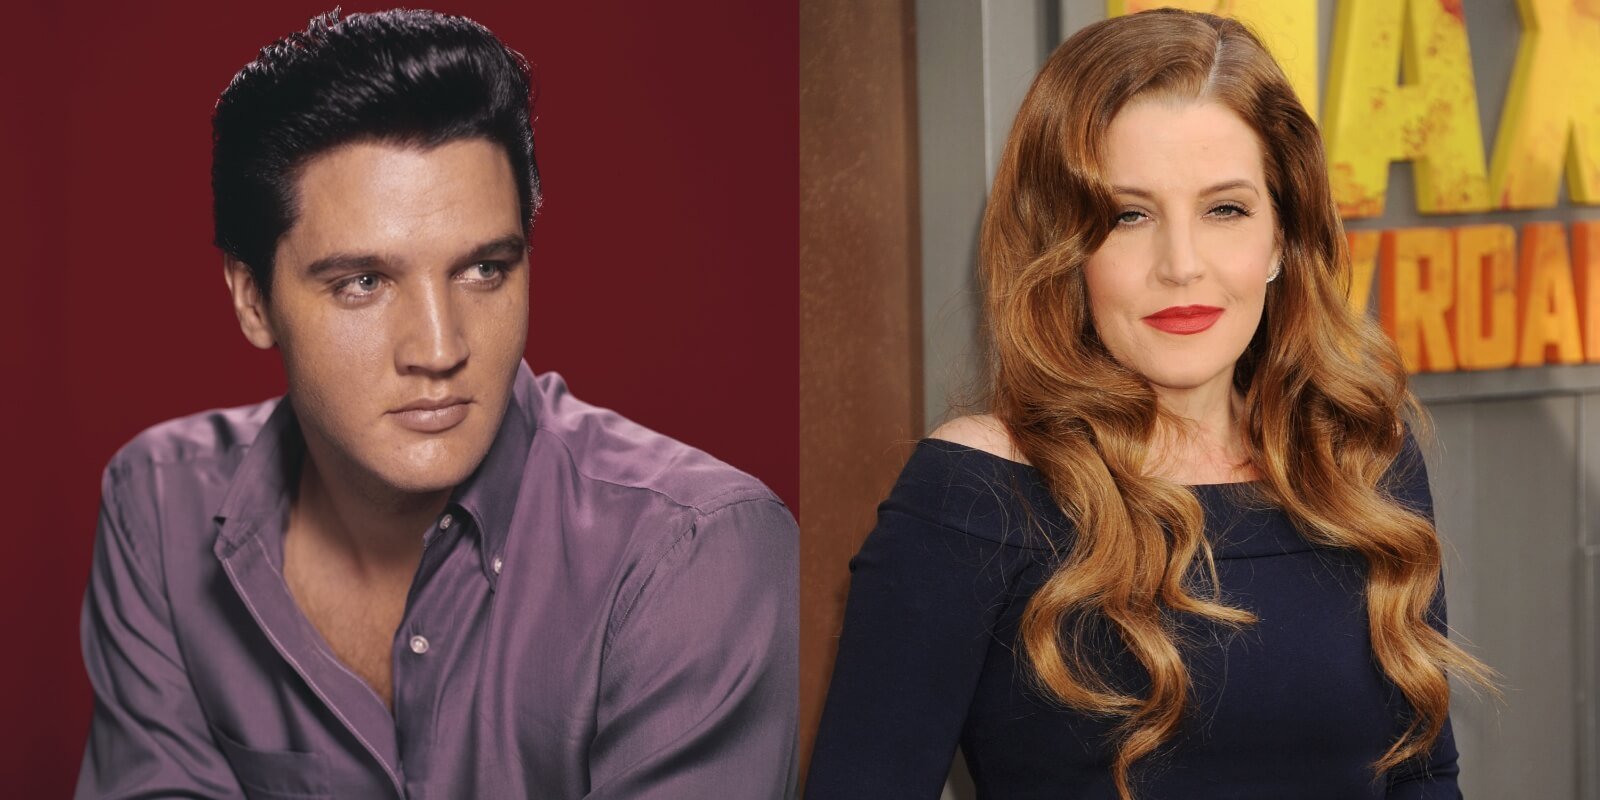 Elvis Presley and Lisa Marie Presley in side-by-side photographs.